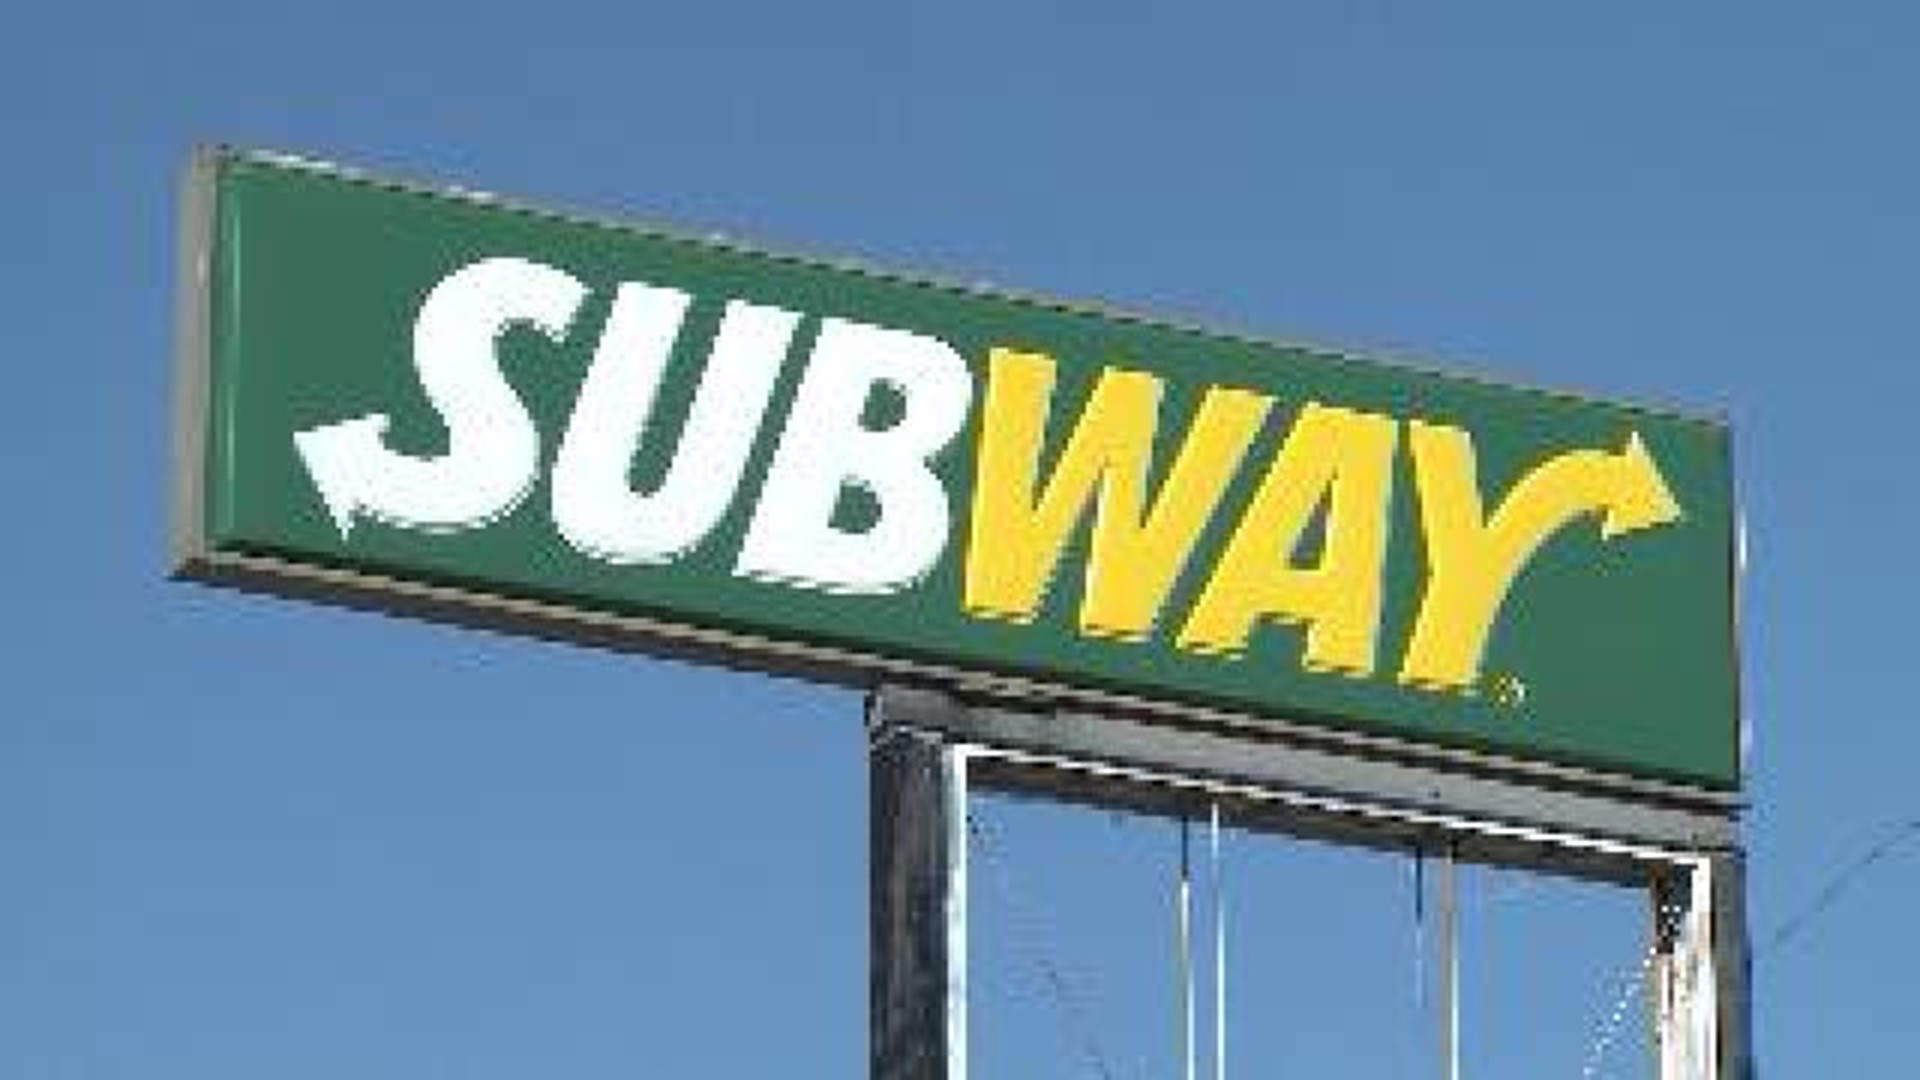 Local Man Files Lawsuit Against Subway